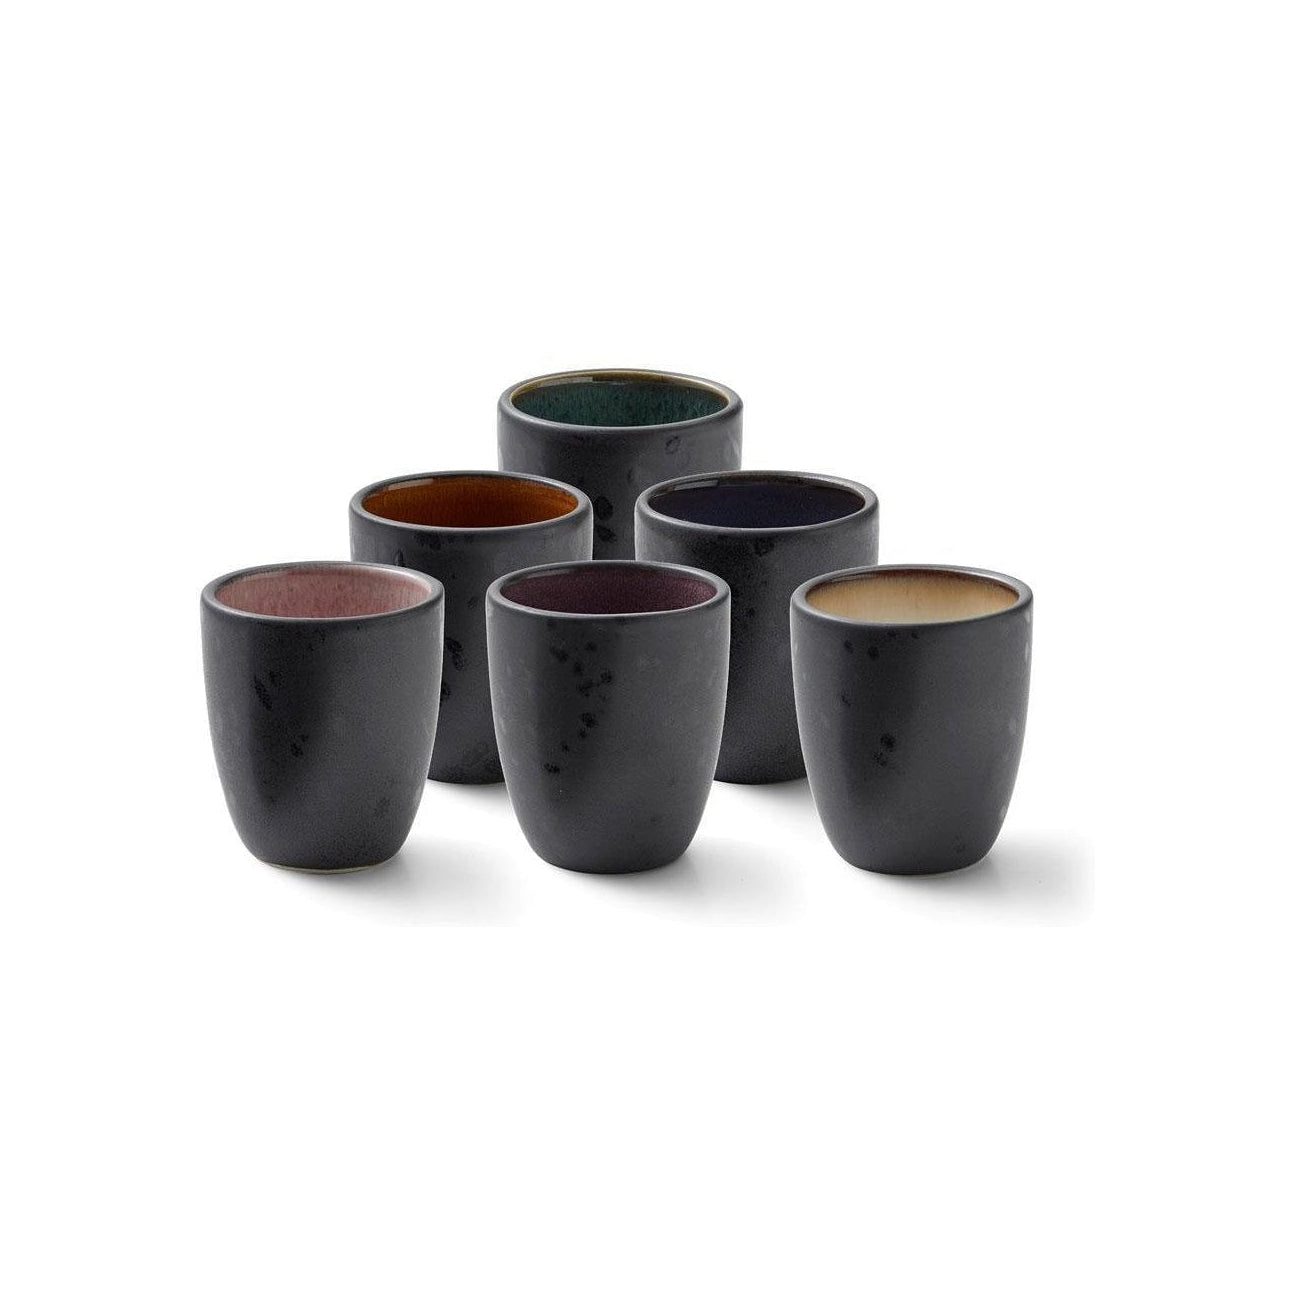 Bitz Espresso Cups set, olika färger, 6 st.